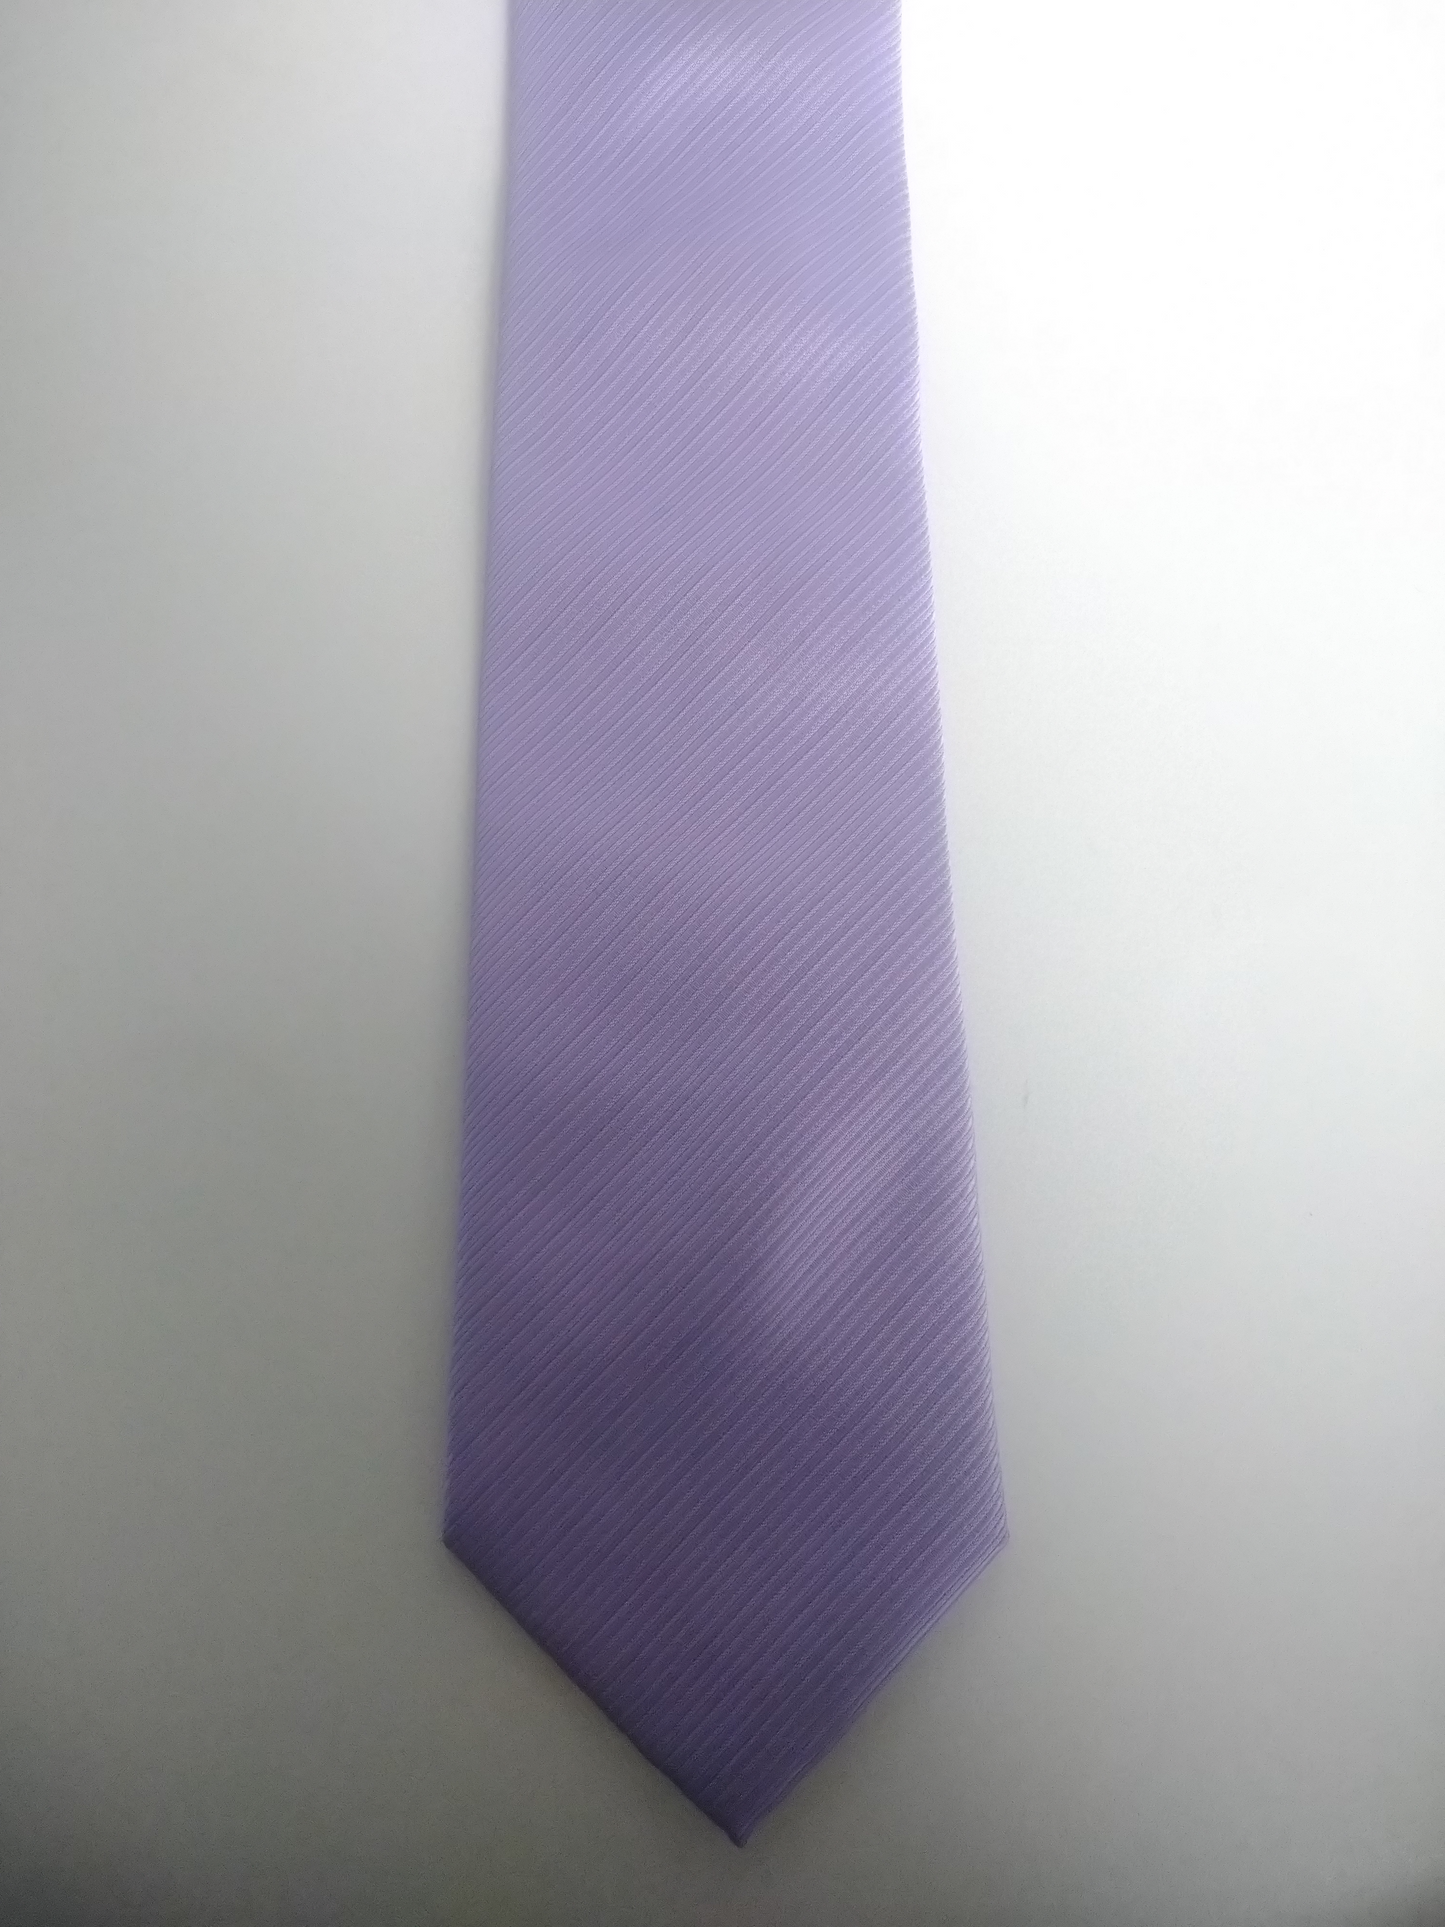 Cravatta di canda vintage. Viola a strisce. Poliestere.